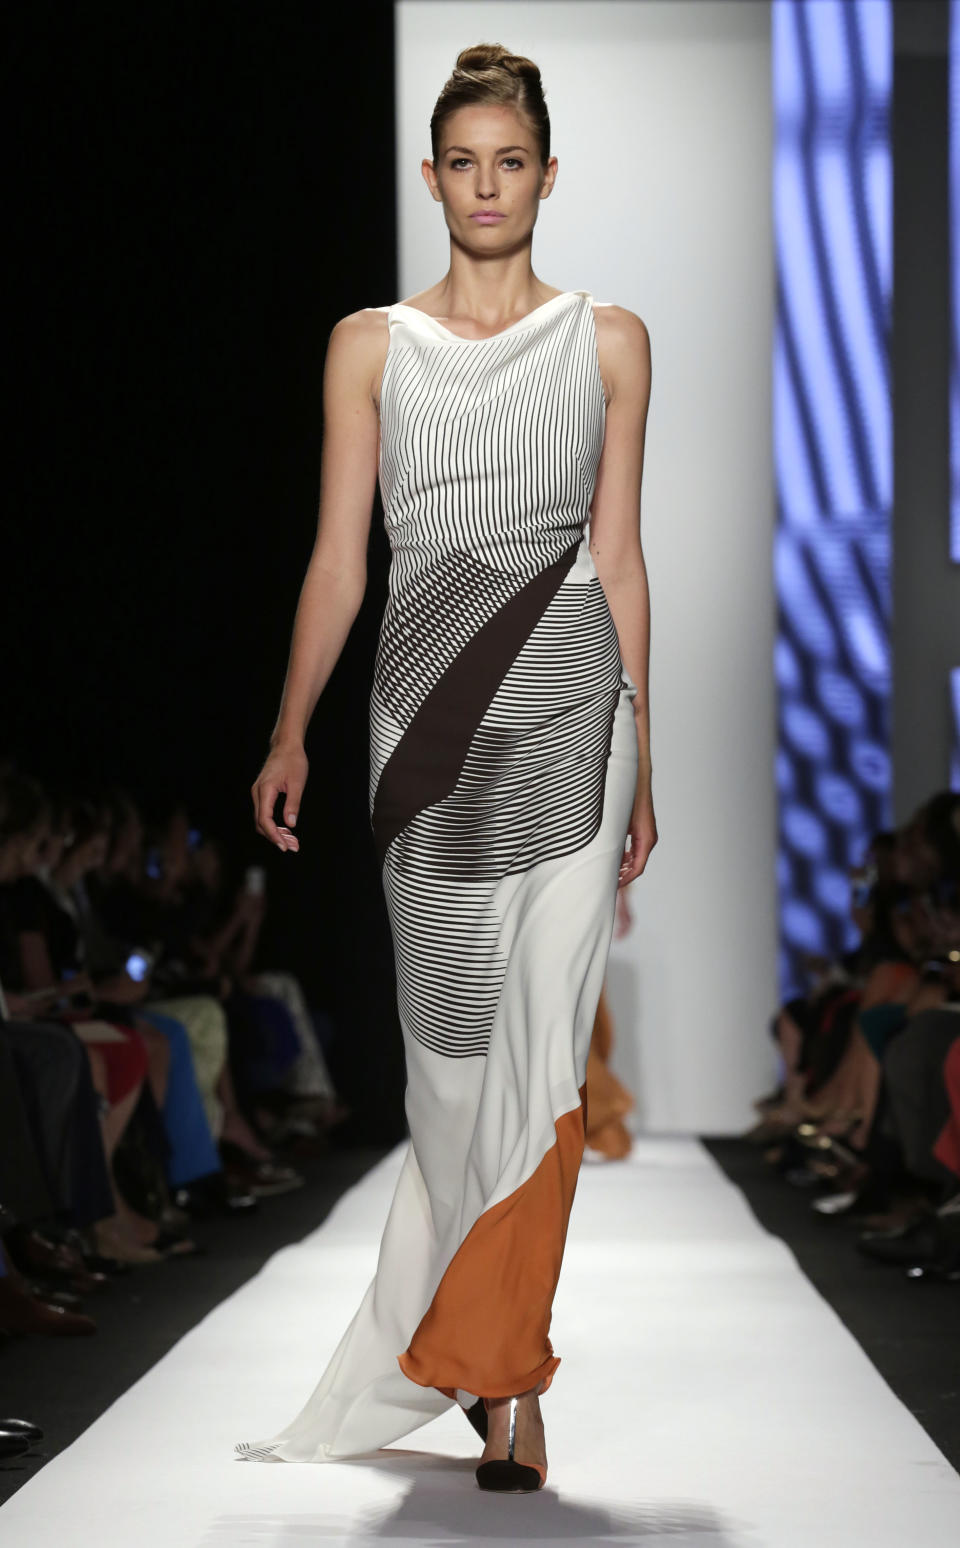 The Carolina Herrera Spring 2014 collection is modeled during Fashion Week in New York, Monday, Sept. 9, 2013. (AP Photo/Richard Drew)